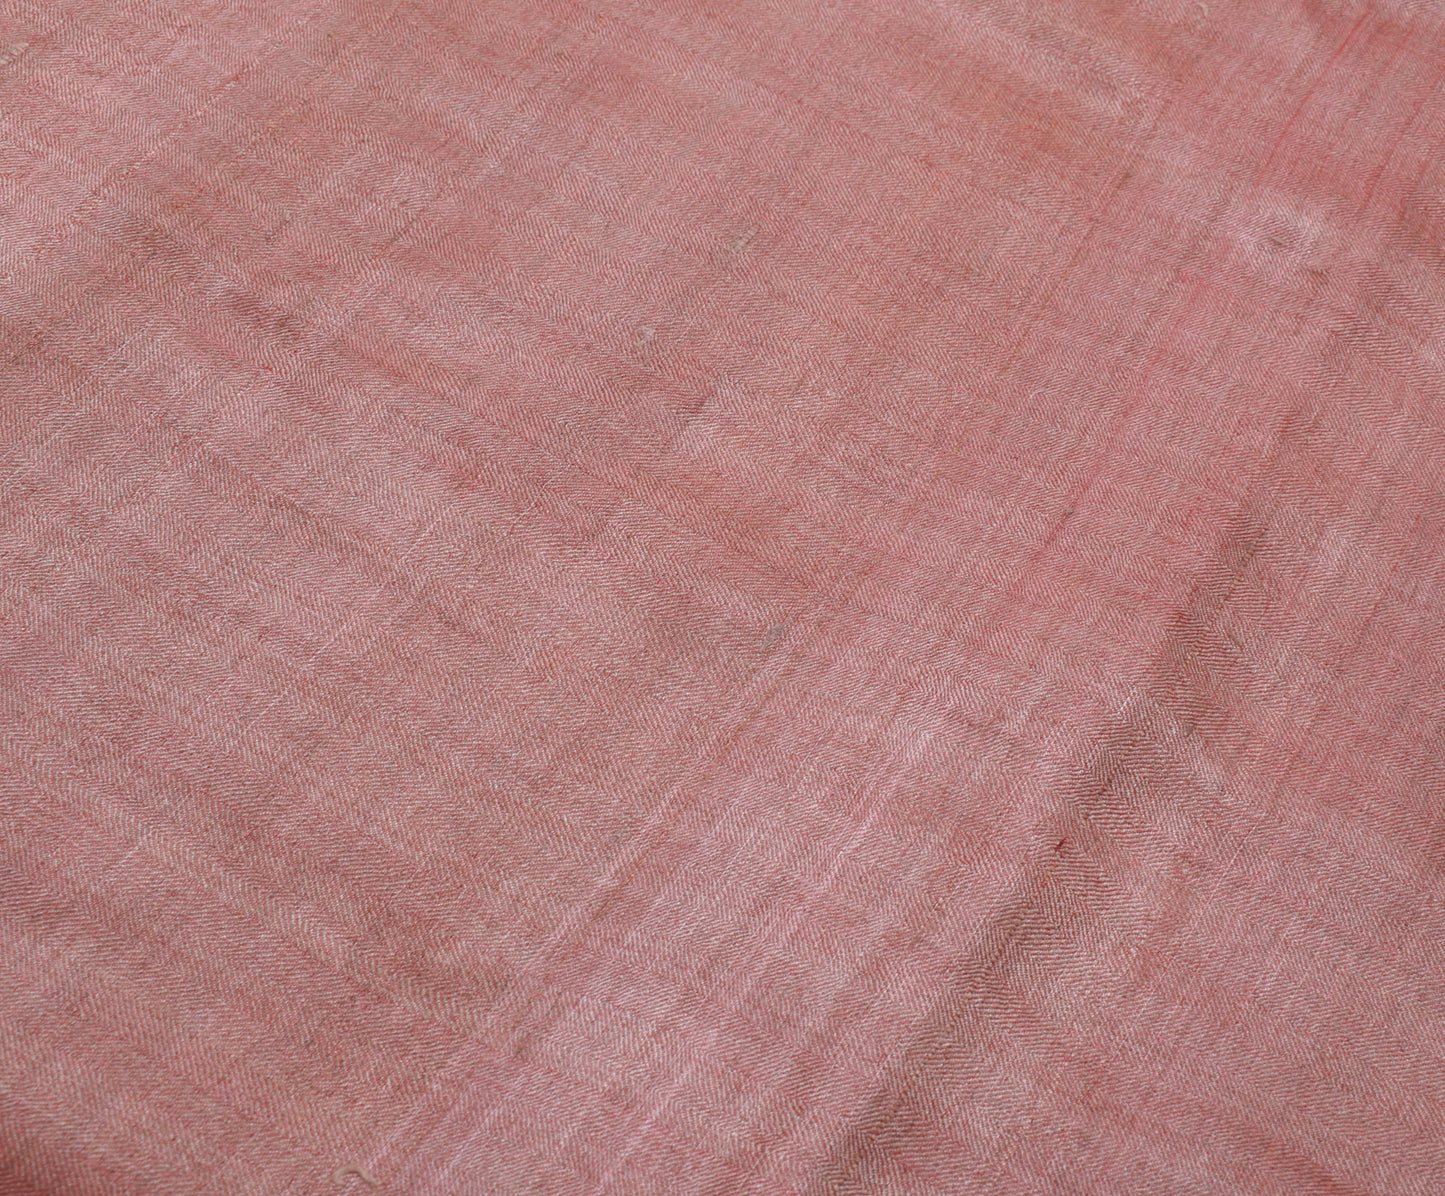 Sushila Vintage Indian Saree 100% Pure Woolen Woven 5 Yard Sari Craft Fabric